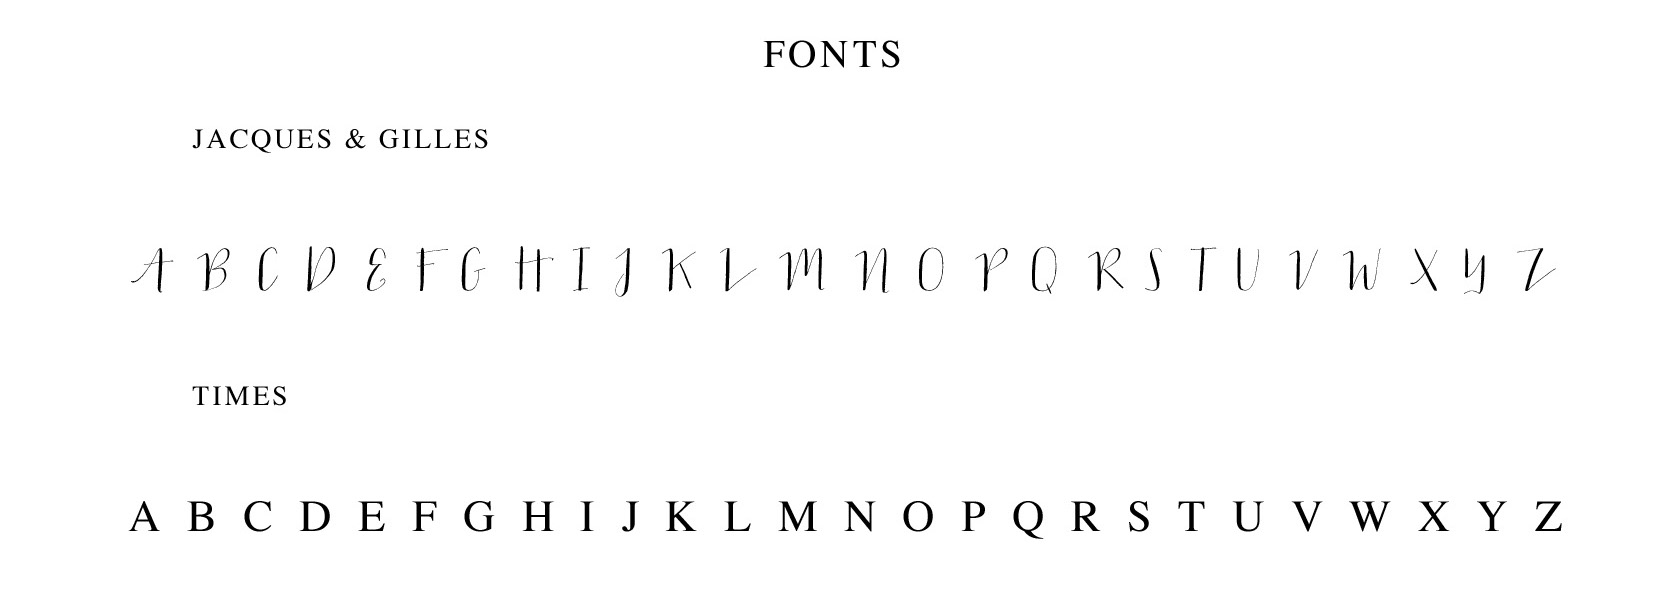 fonts